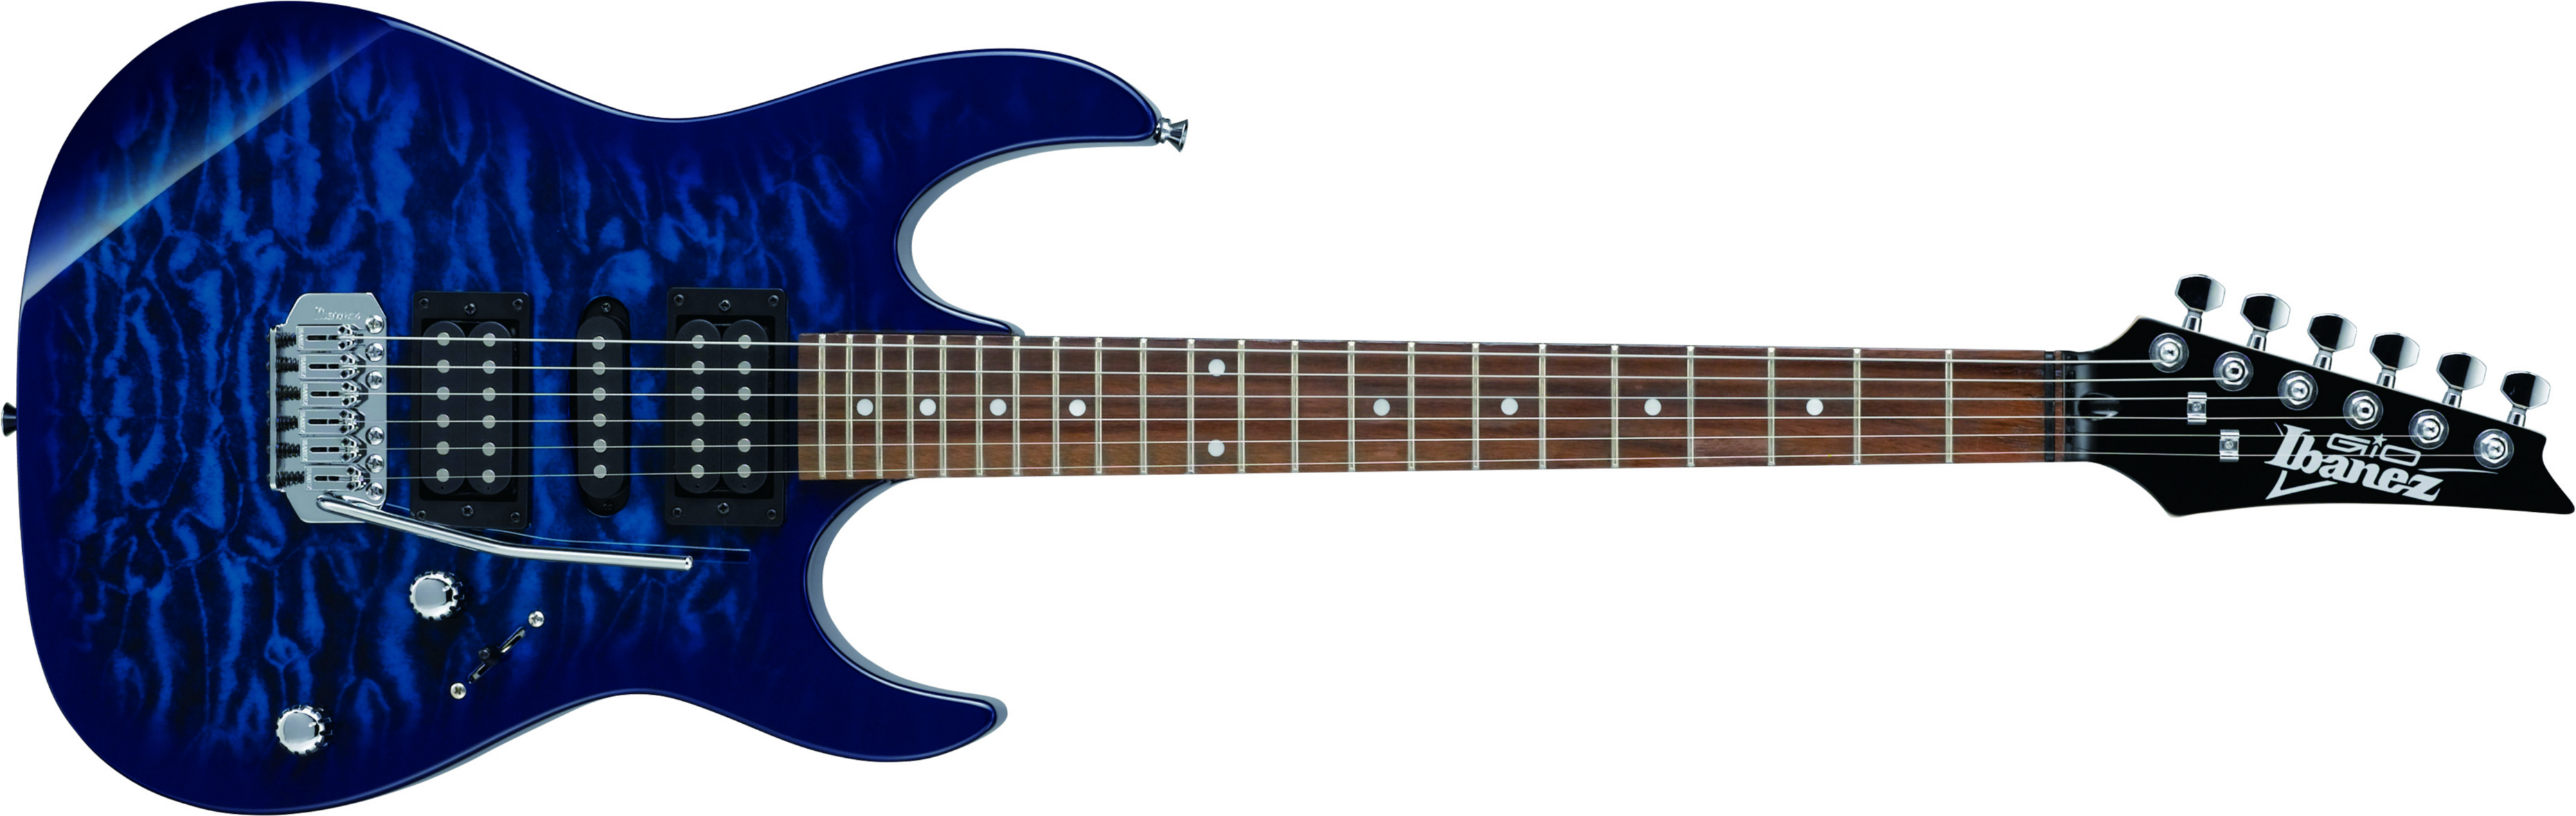 Ibanez Grx70qa Tbb Gio Hsh Trem Nzp - Transparent Blue Burst - Str shape electric guitar - Main picture